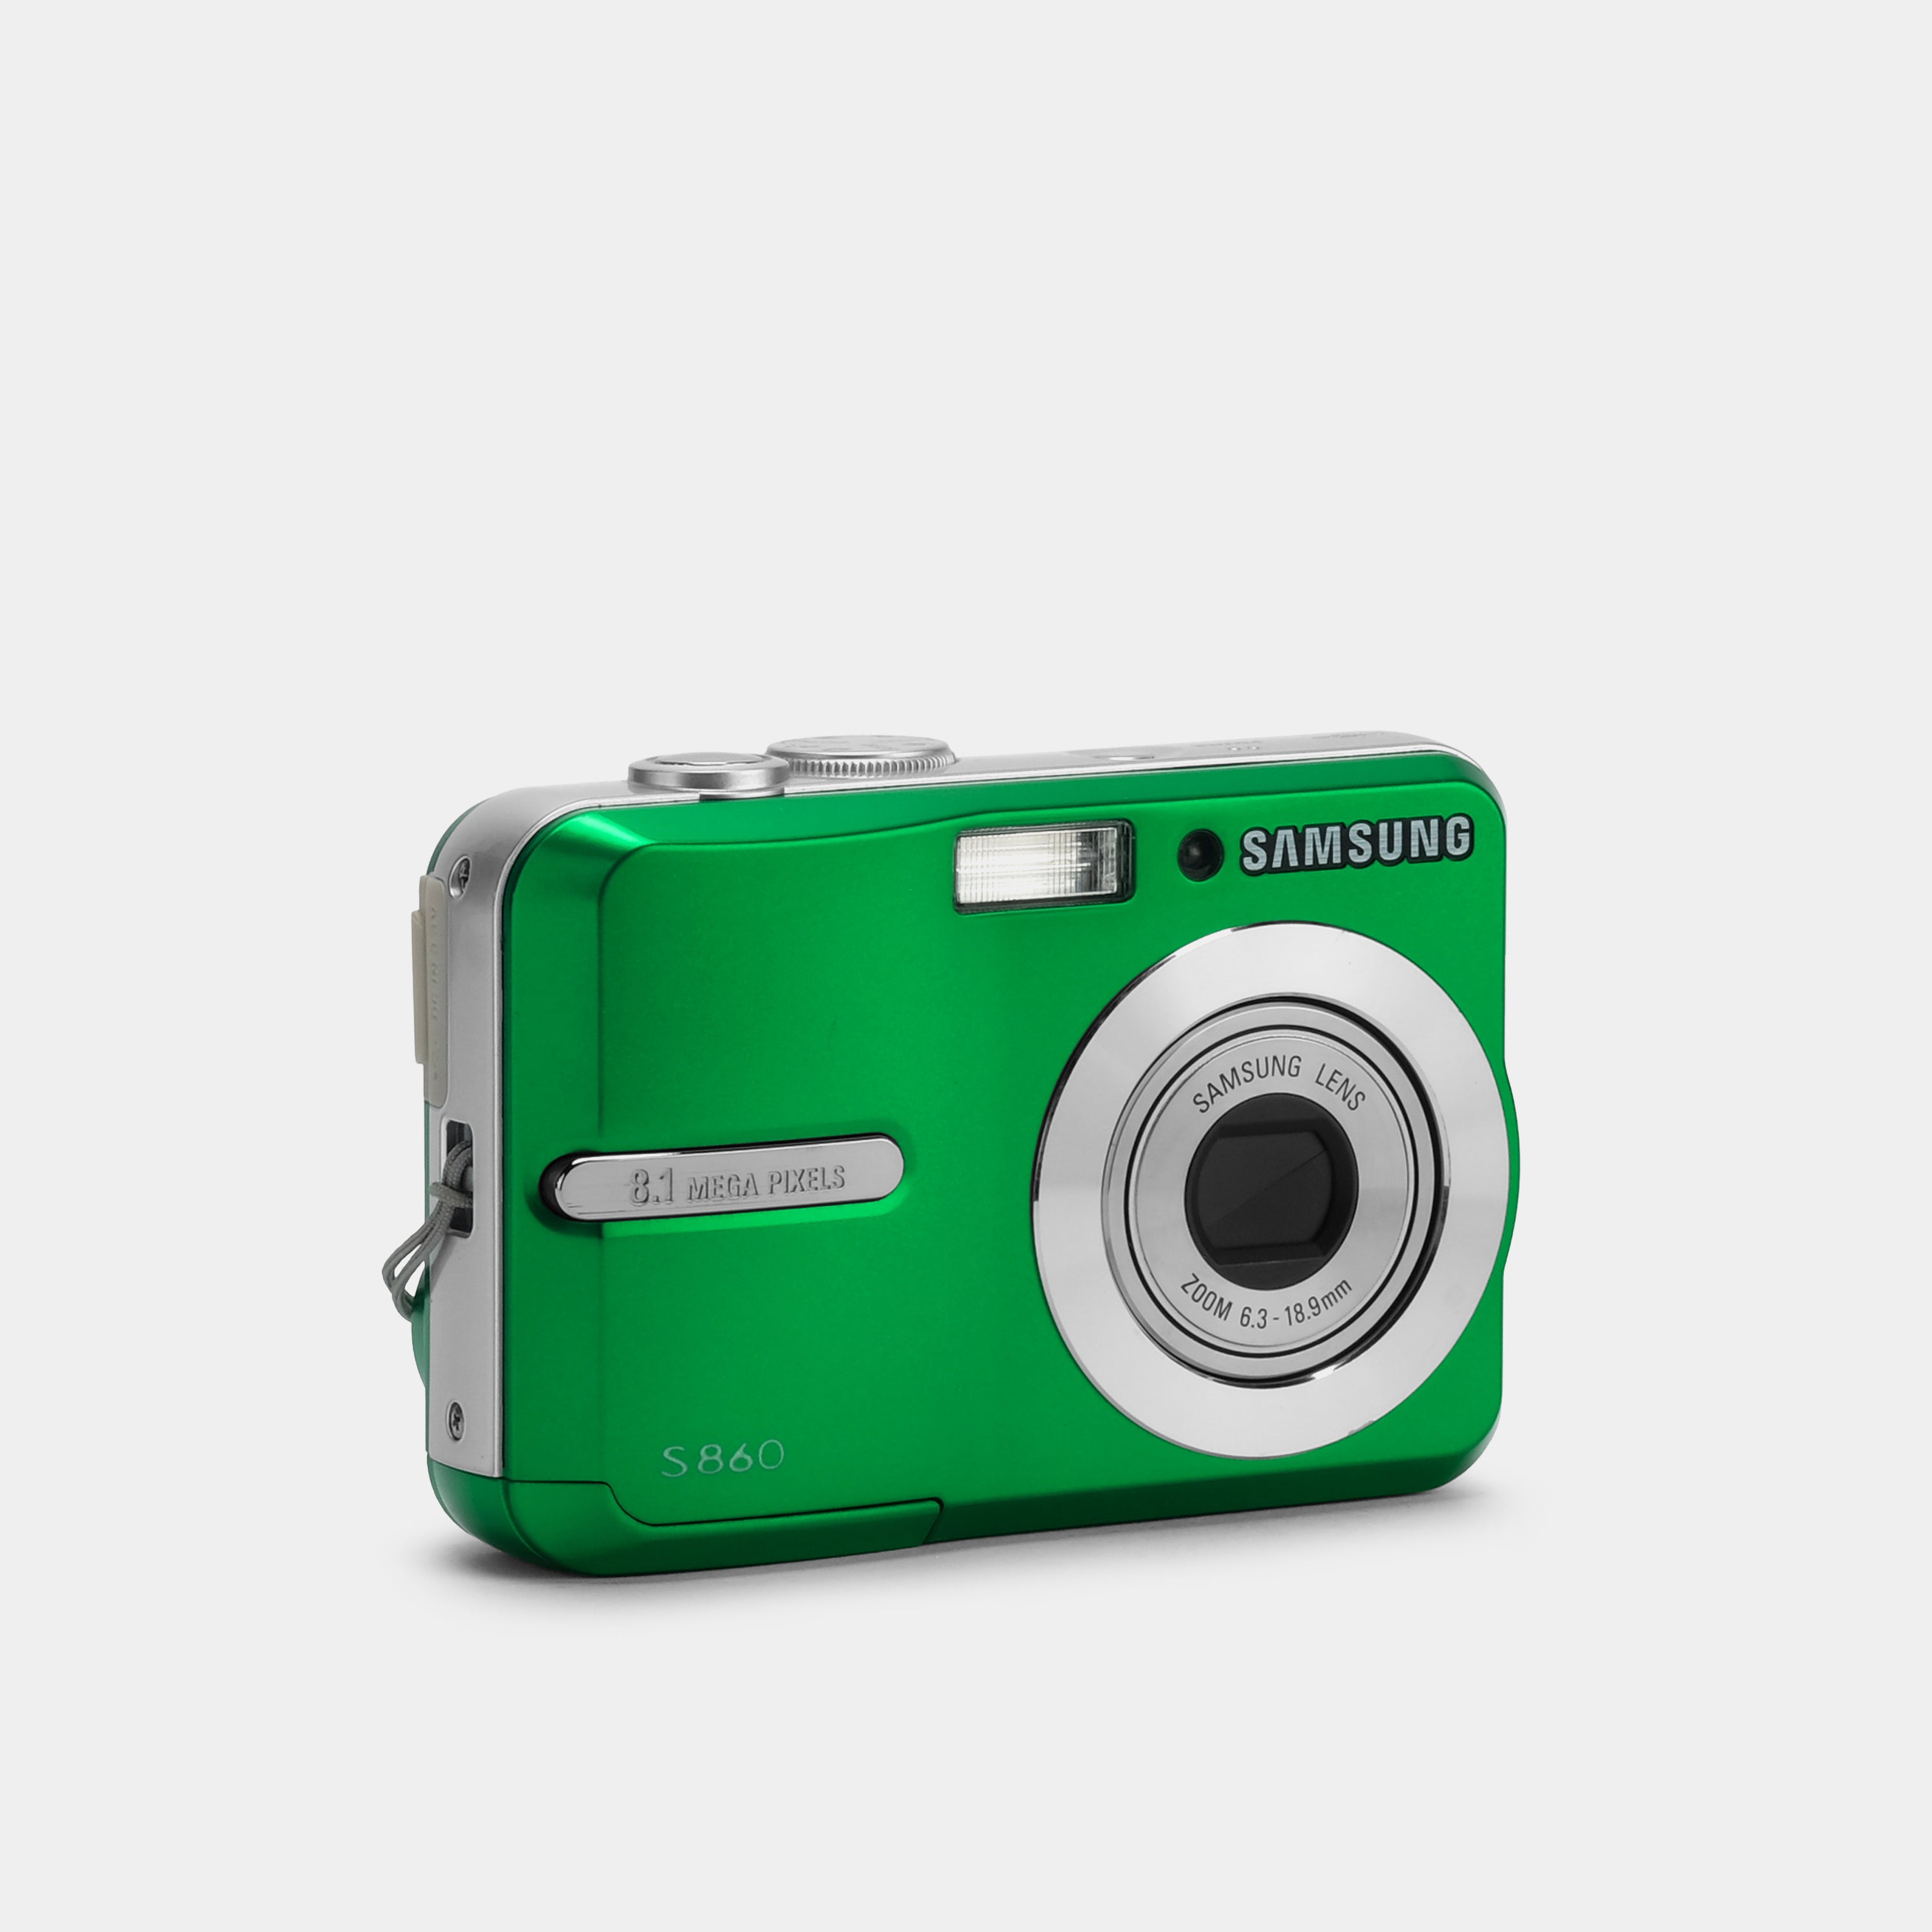 Samsung S860 Green Point and Shoot Digital Camera